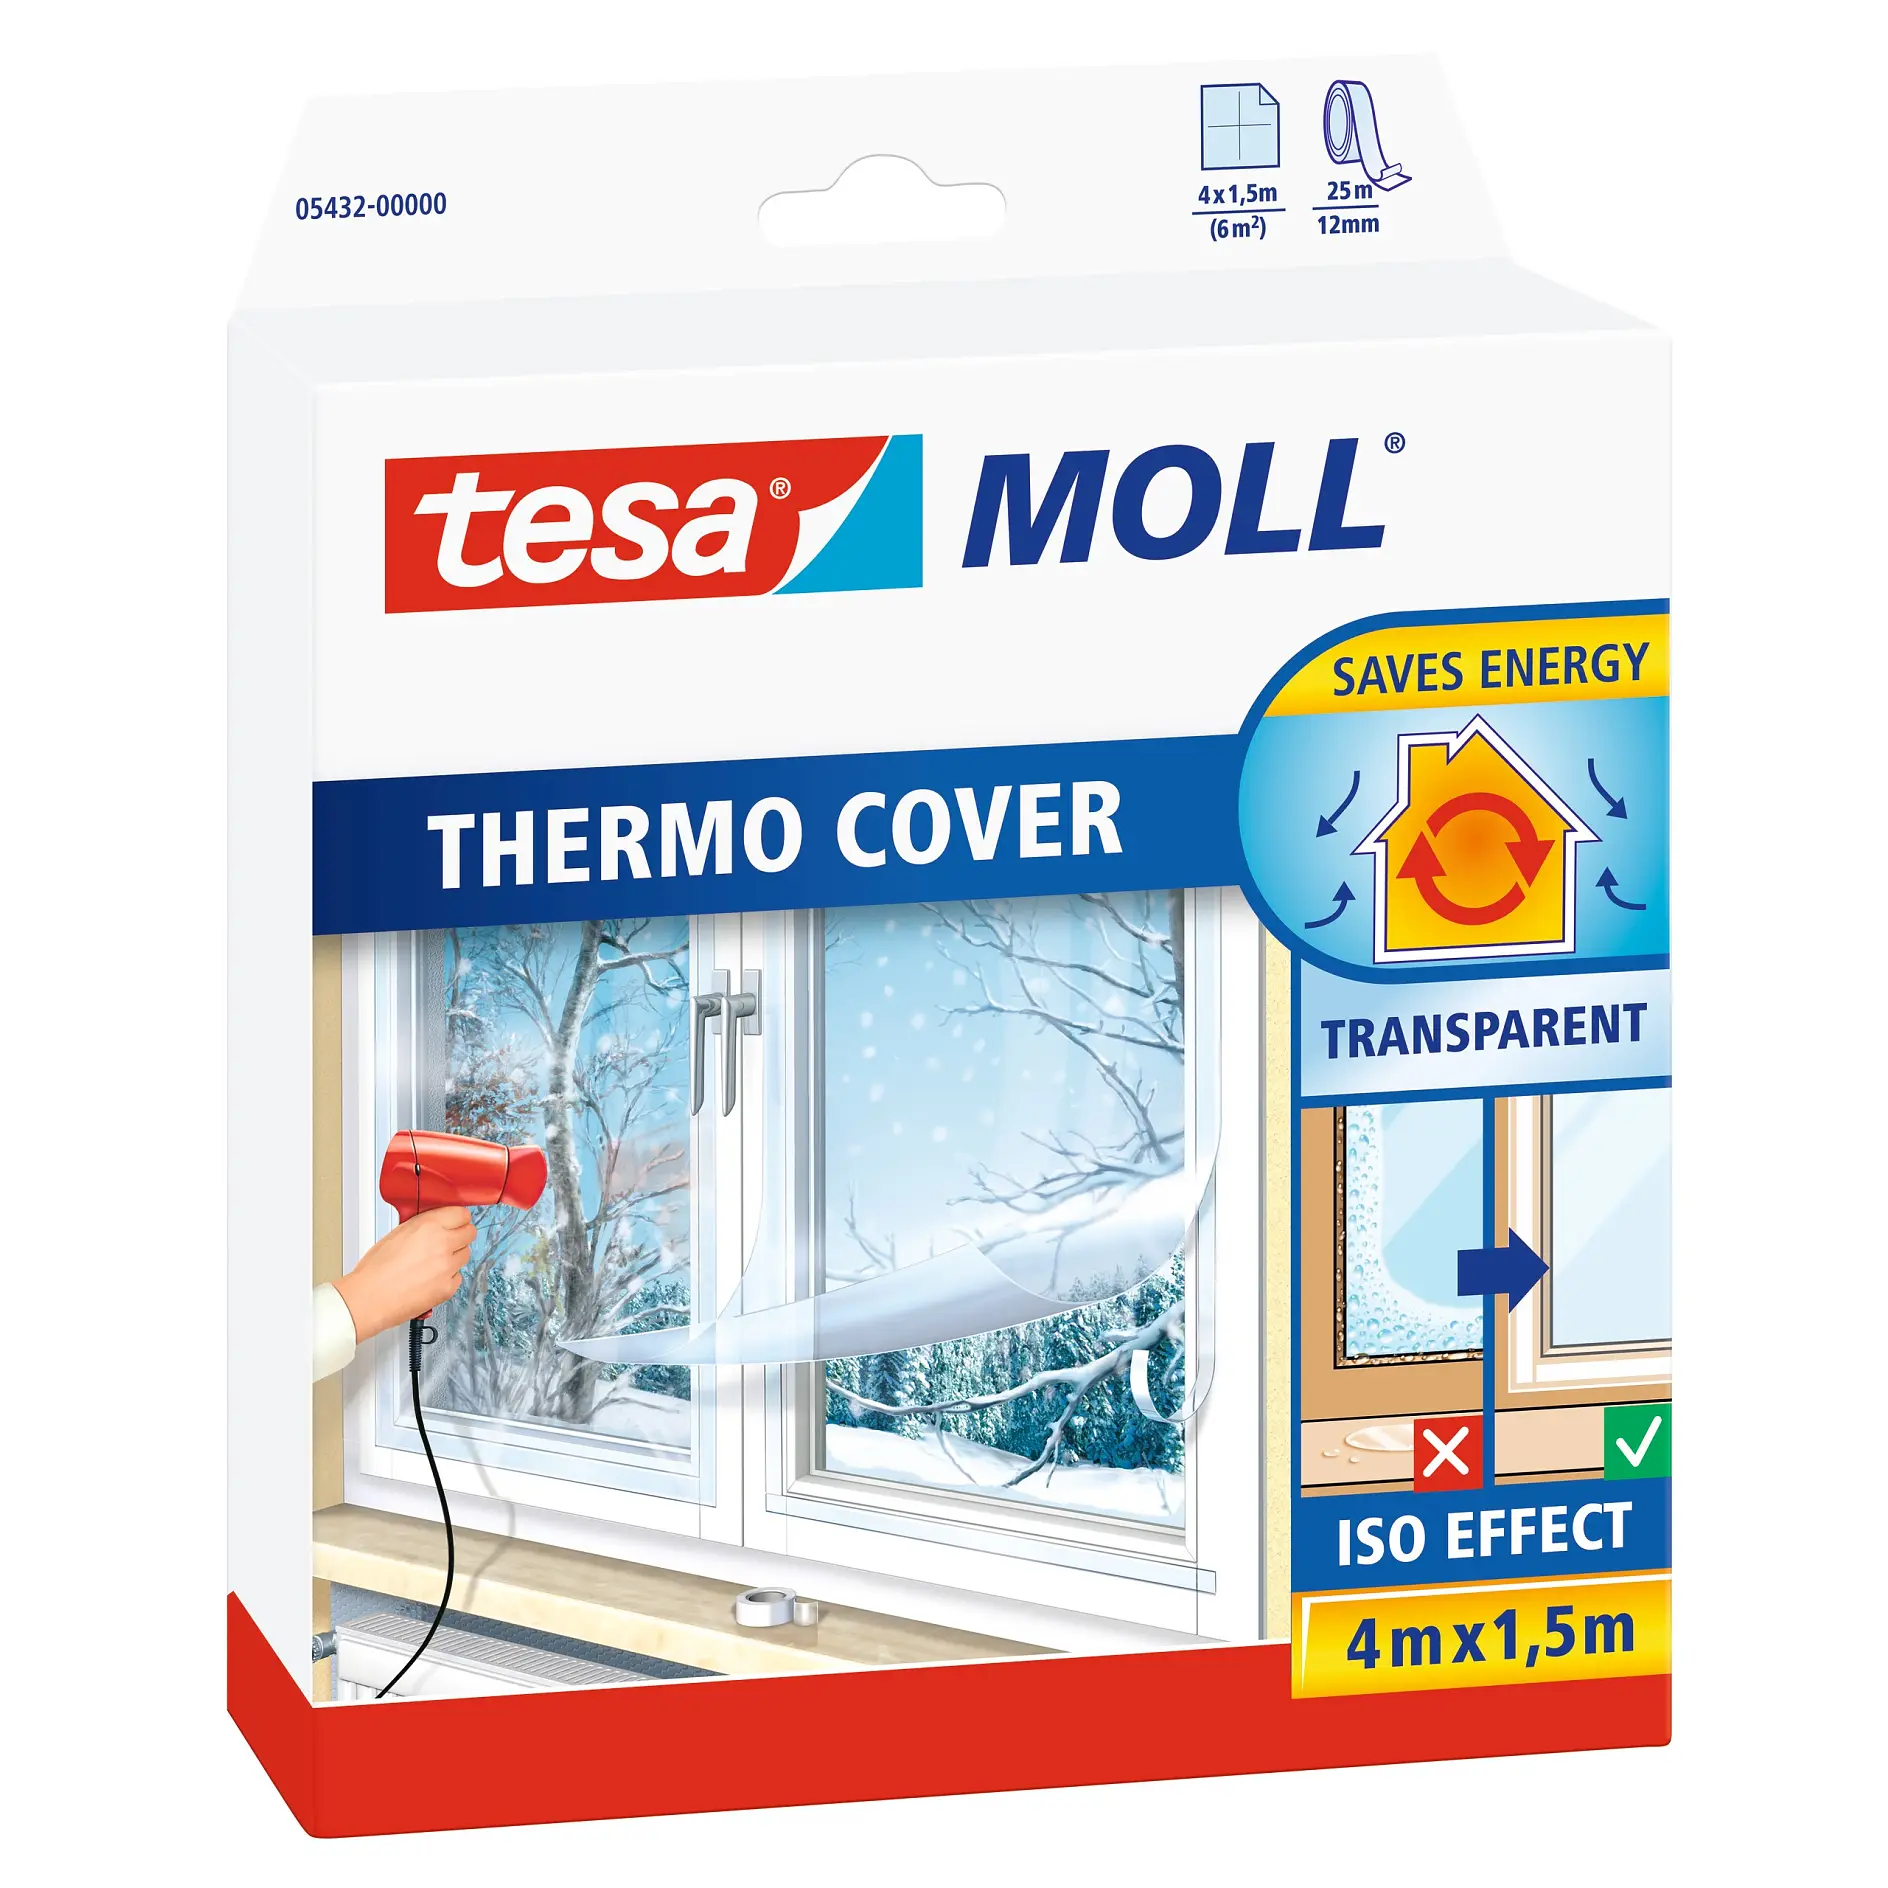 [en-en] tesamoll Thermo Cover, transparent, 4m x 1,5m